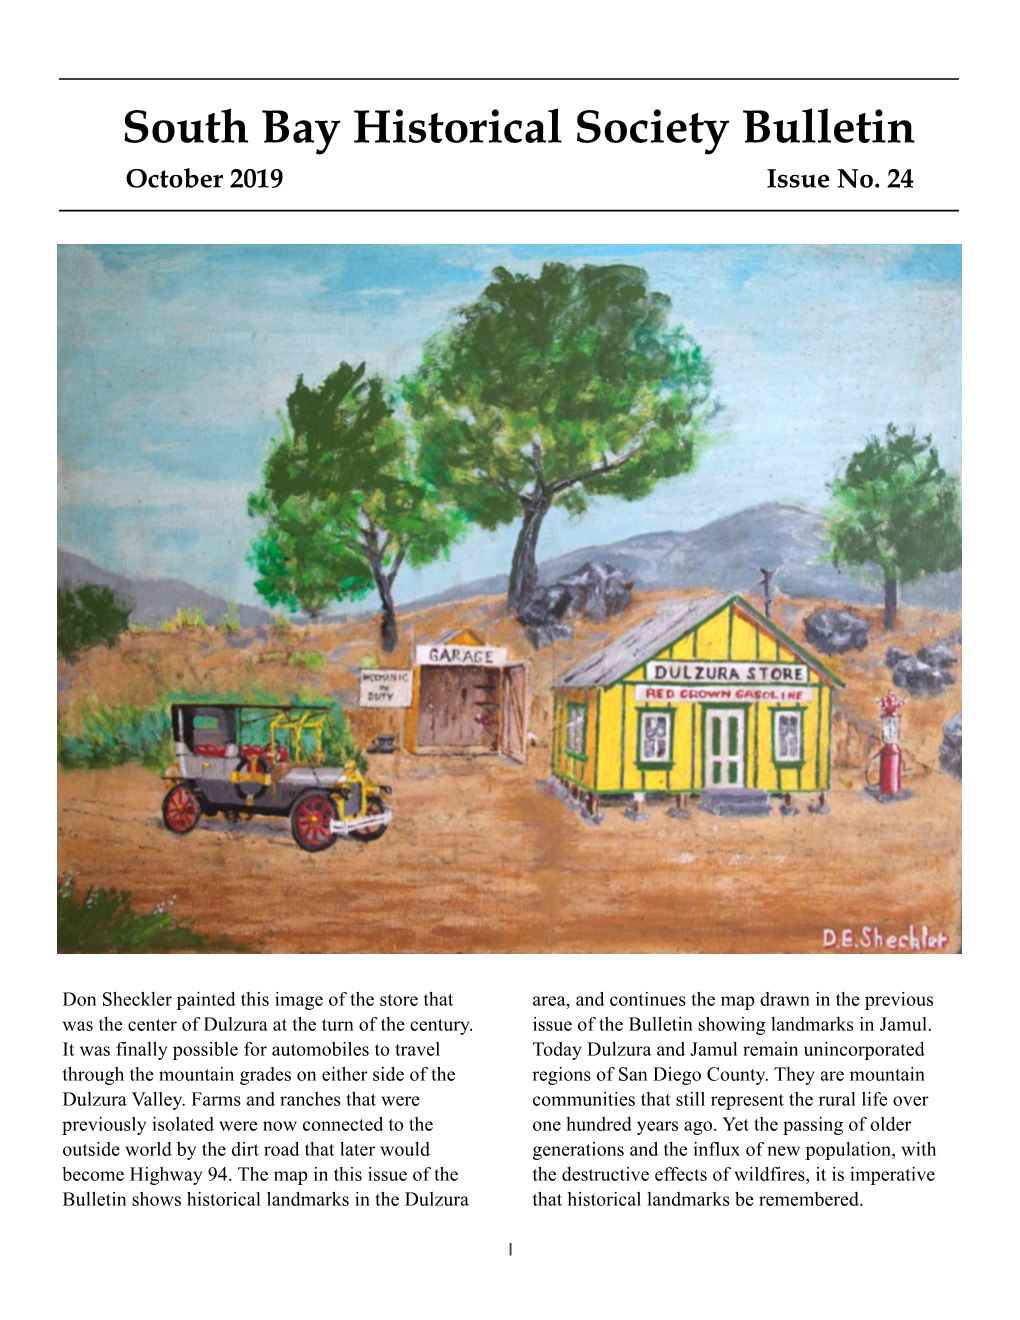 South Bay Historical Society Bulletin October 2019 Issue No